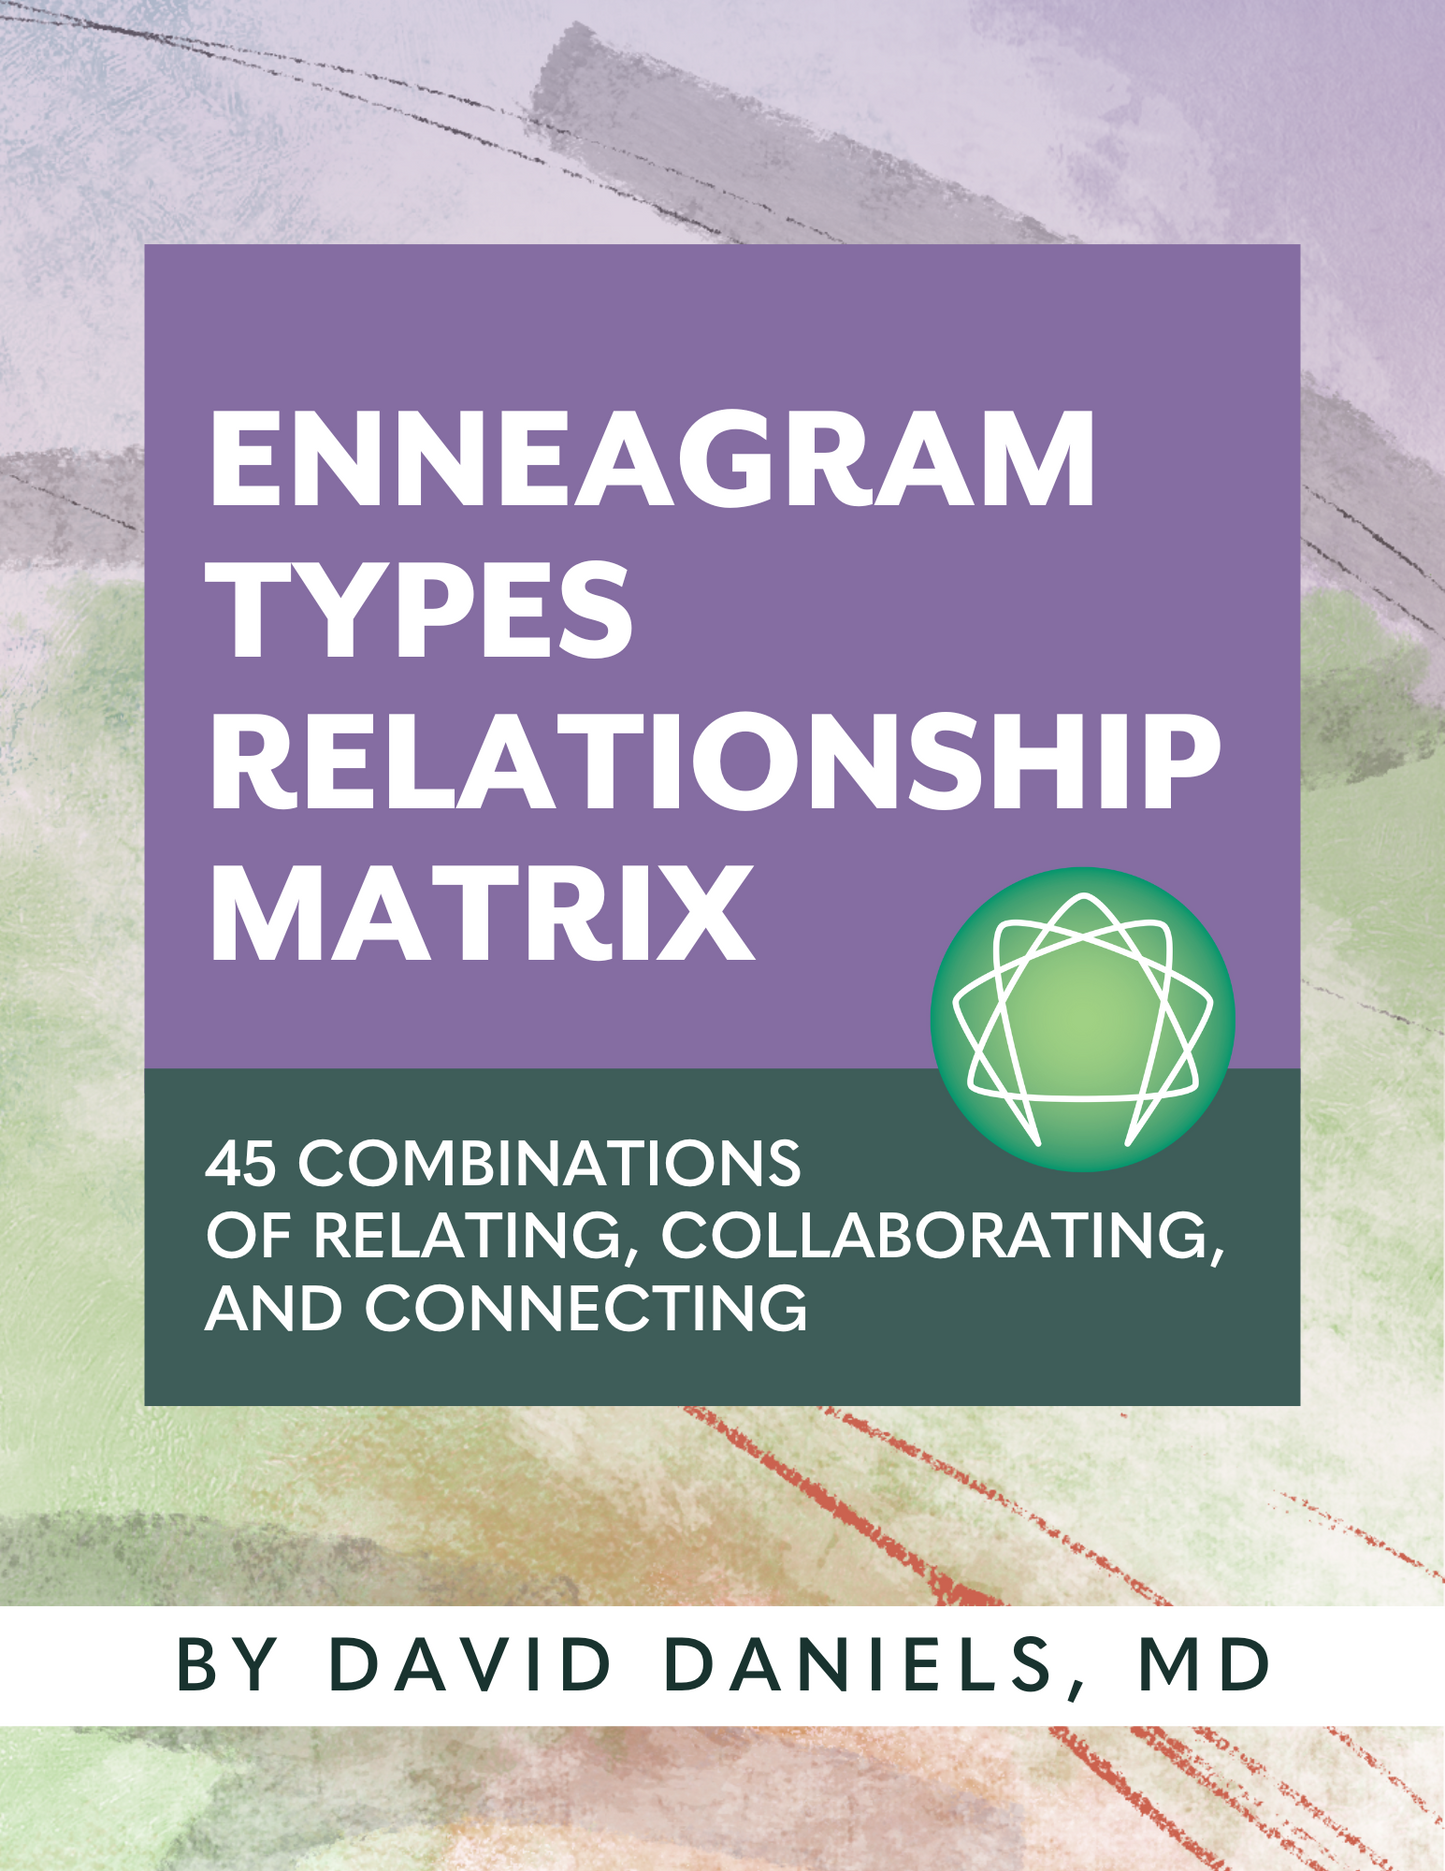 Enneagram Relationships Matrix